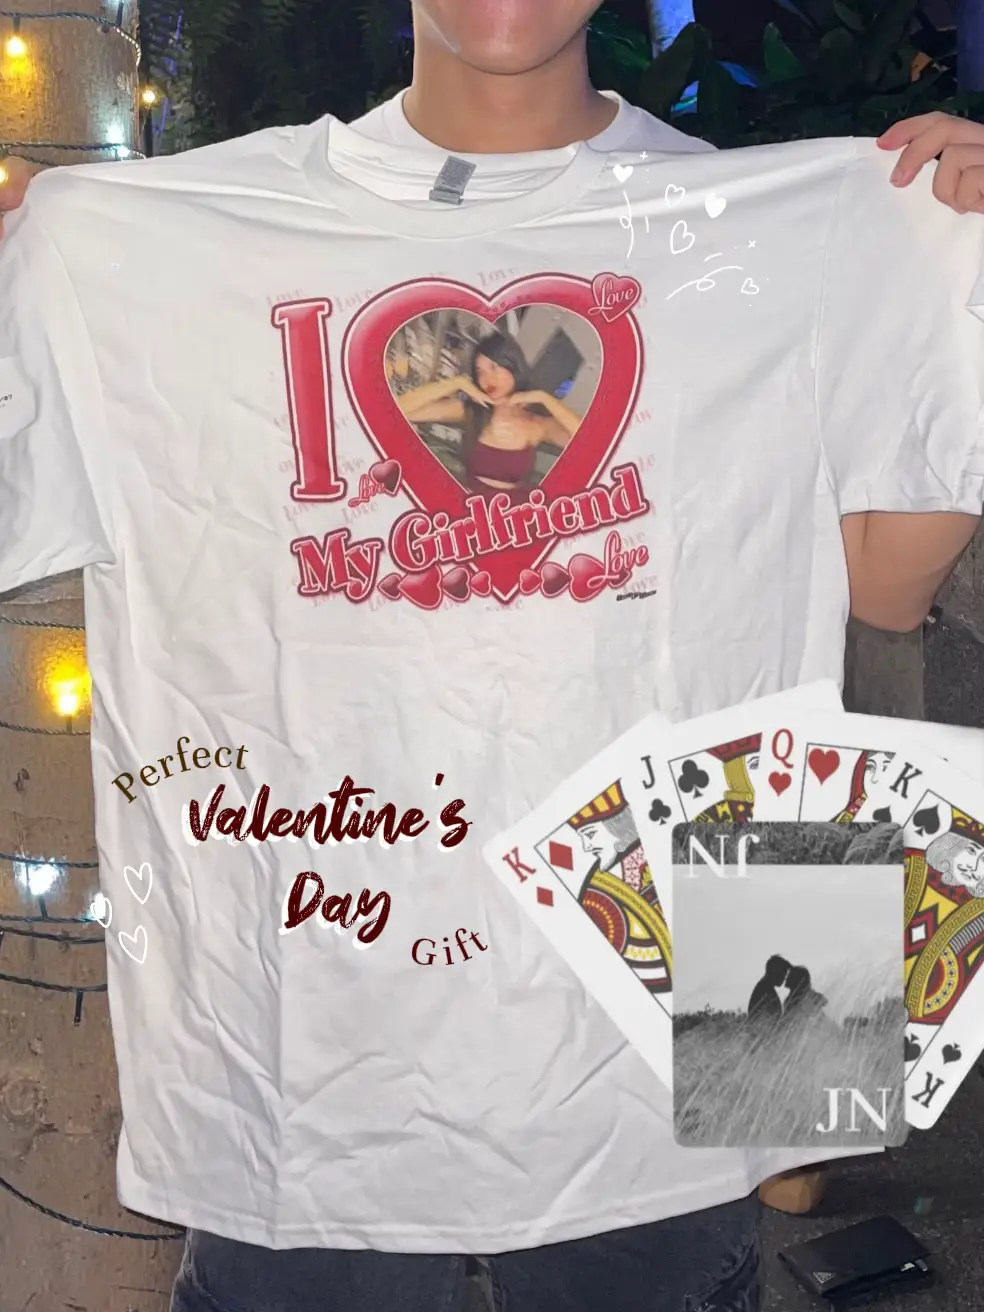 I Love My Girlfriend T-shirt, I Heart My Girlfriend Shirt, Valentine's Day  Tee Shirt, Valentine Gift, Boyfriend Shirt for Him, Her, Unisex -   Singapore